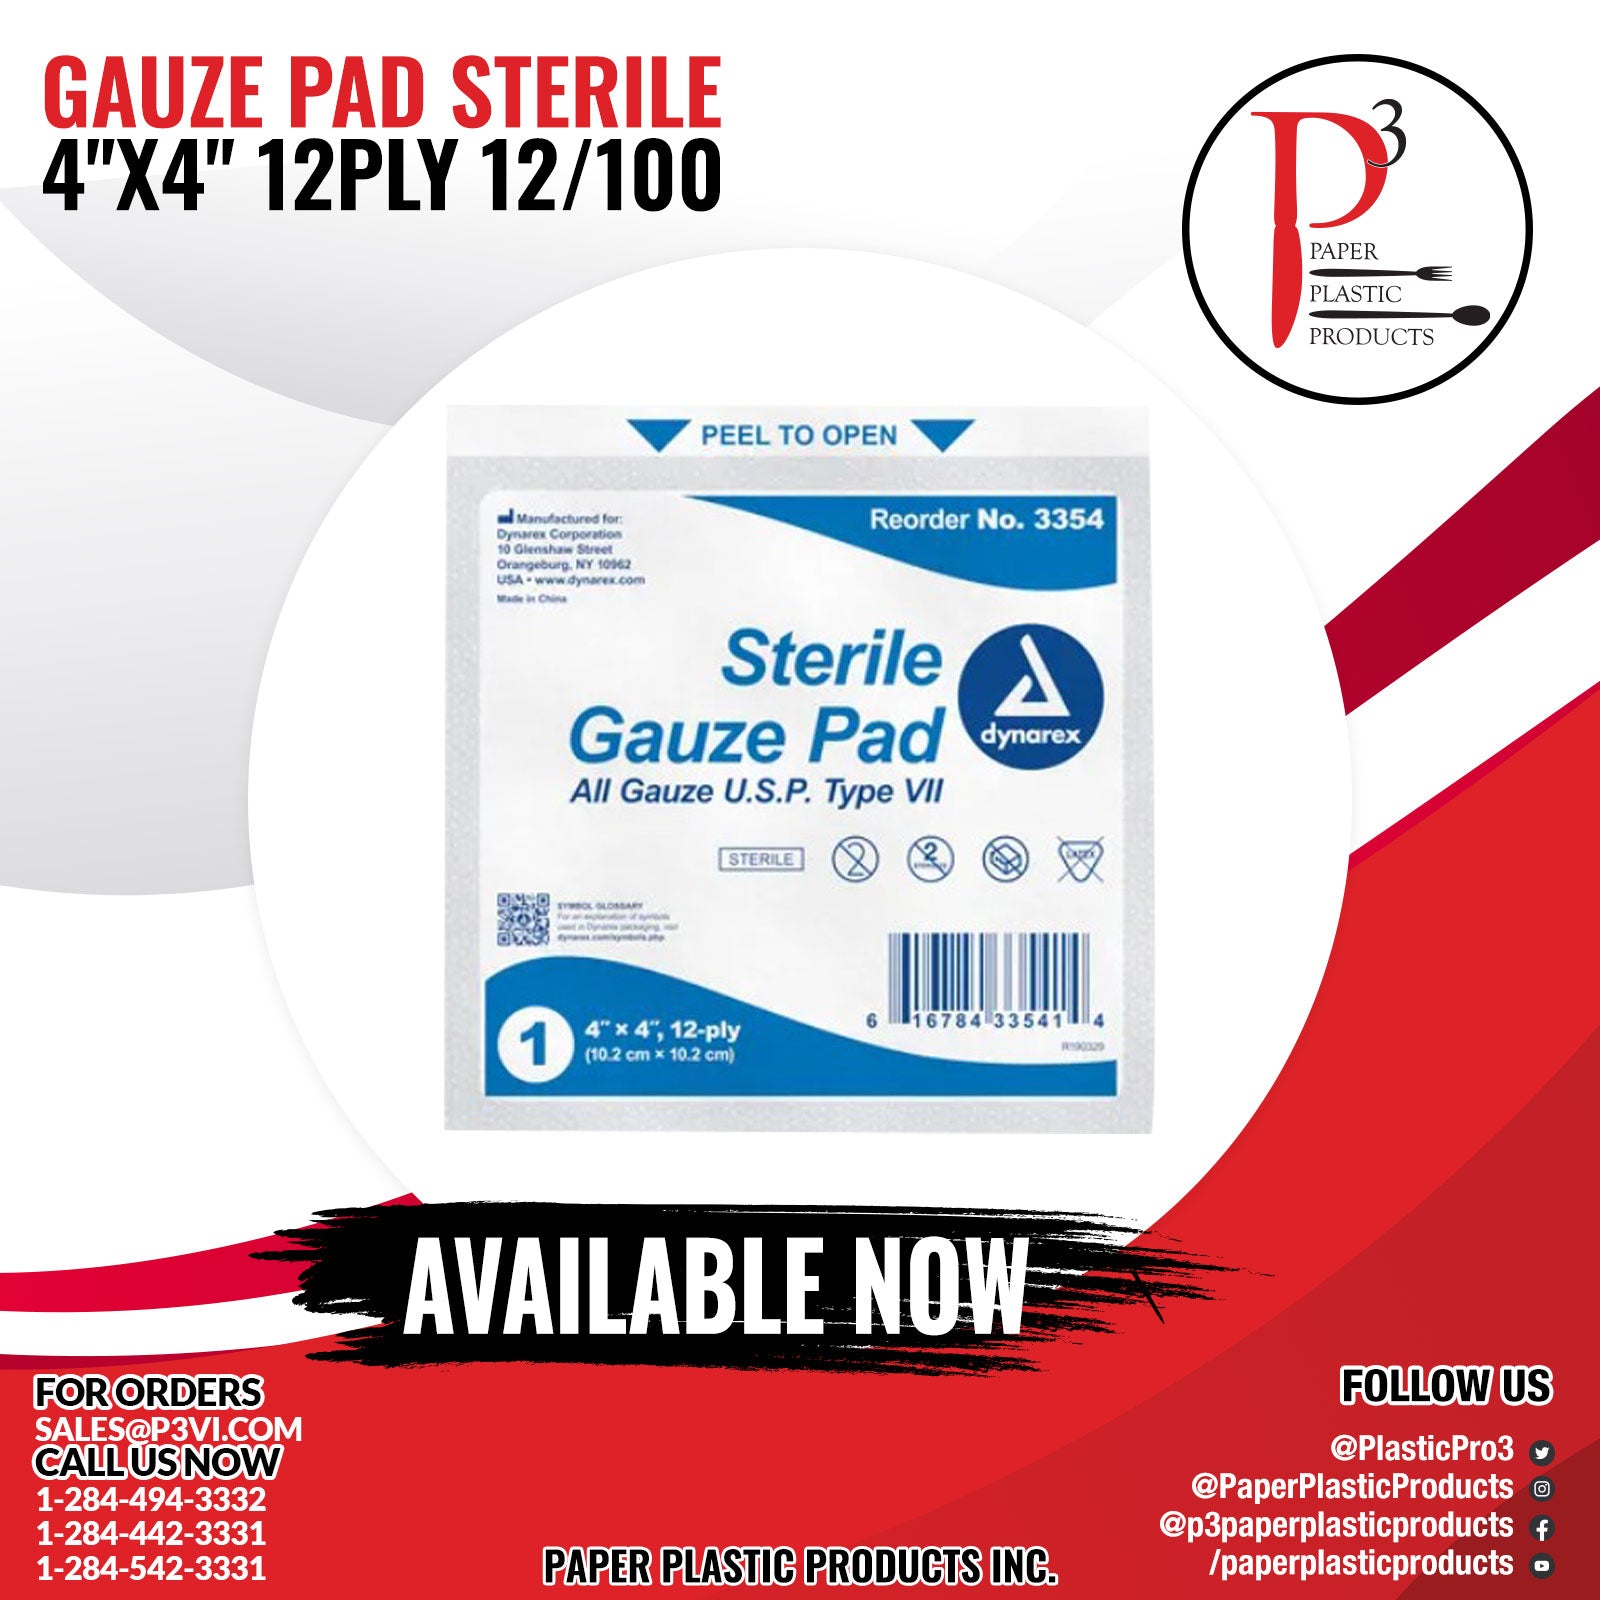 Gauze PAD Sterile 4"x4" 12Ply 12/100